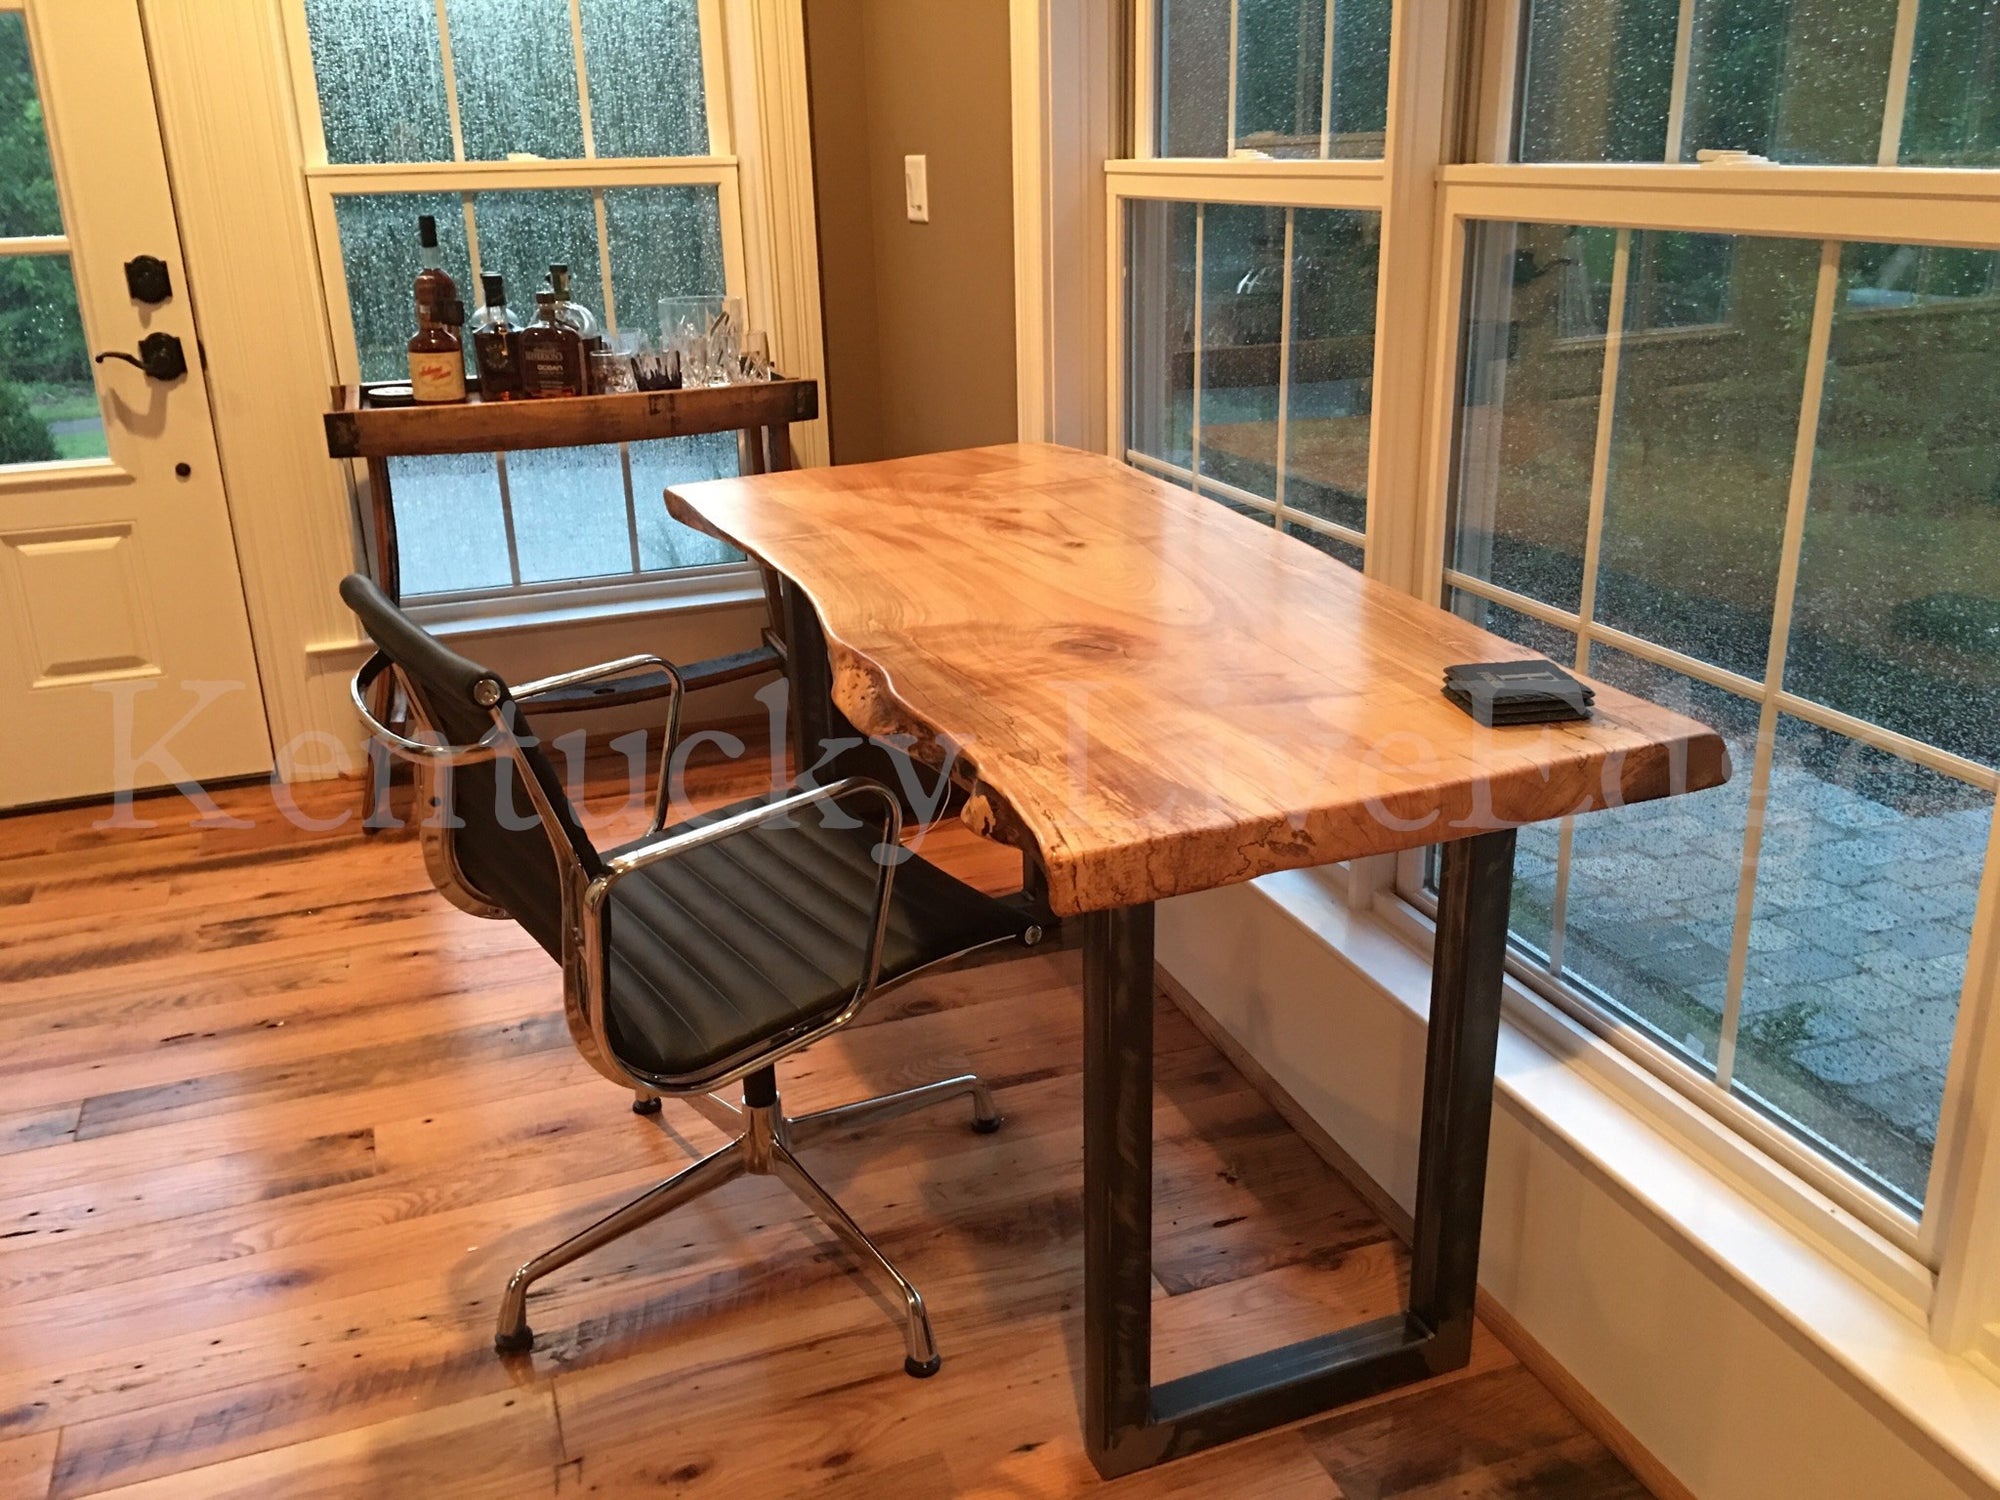 Your Custom Desk- Live Edge Desk- Industrial Desk- Rustic Desk- Wooden Desk- Maple- Walnut- Cherry- Natural Wood Desk- Modern Desk- Office